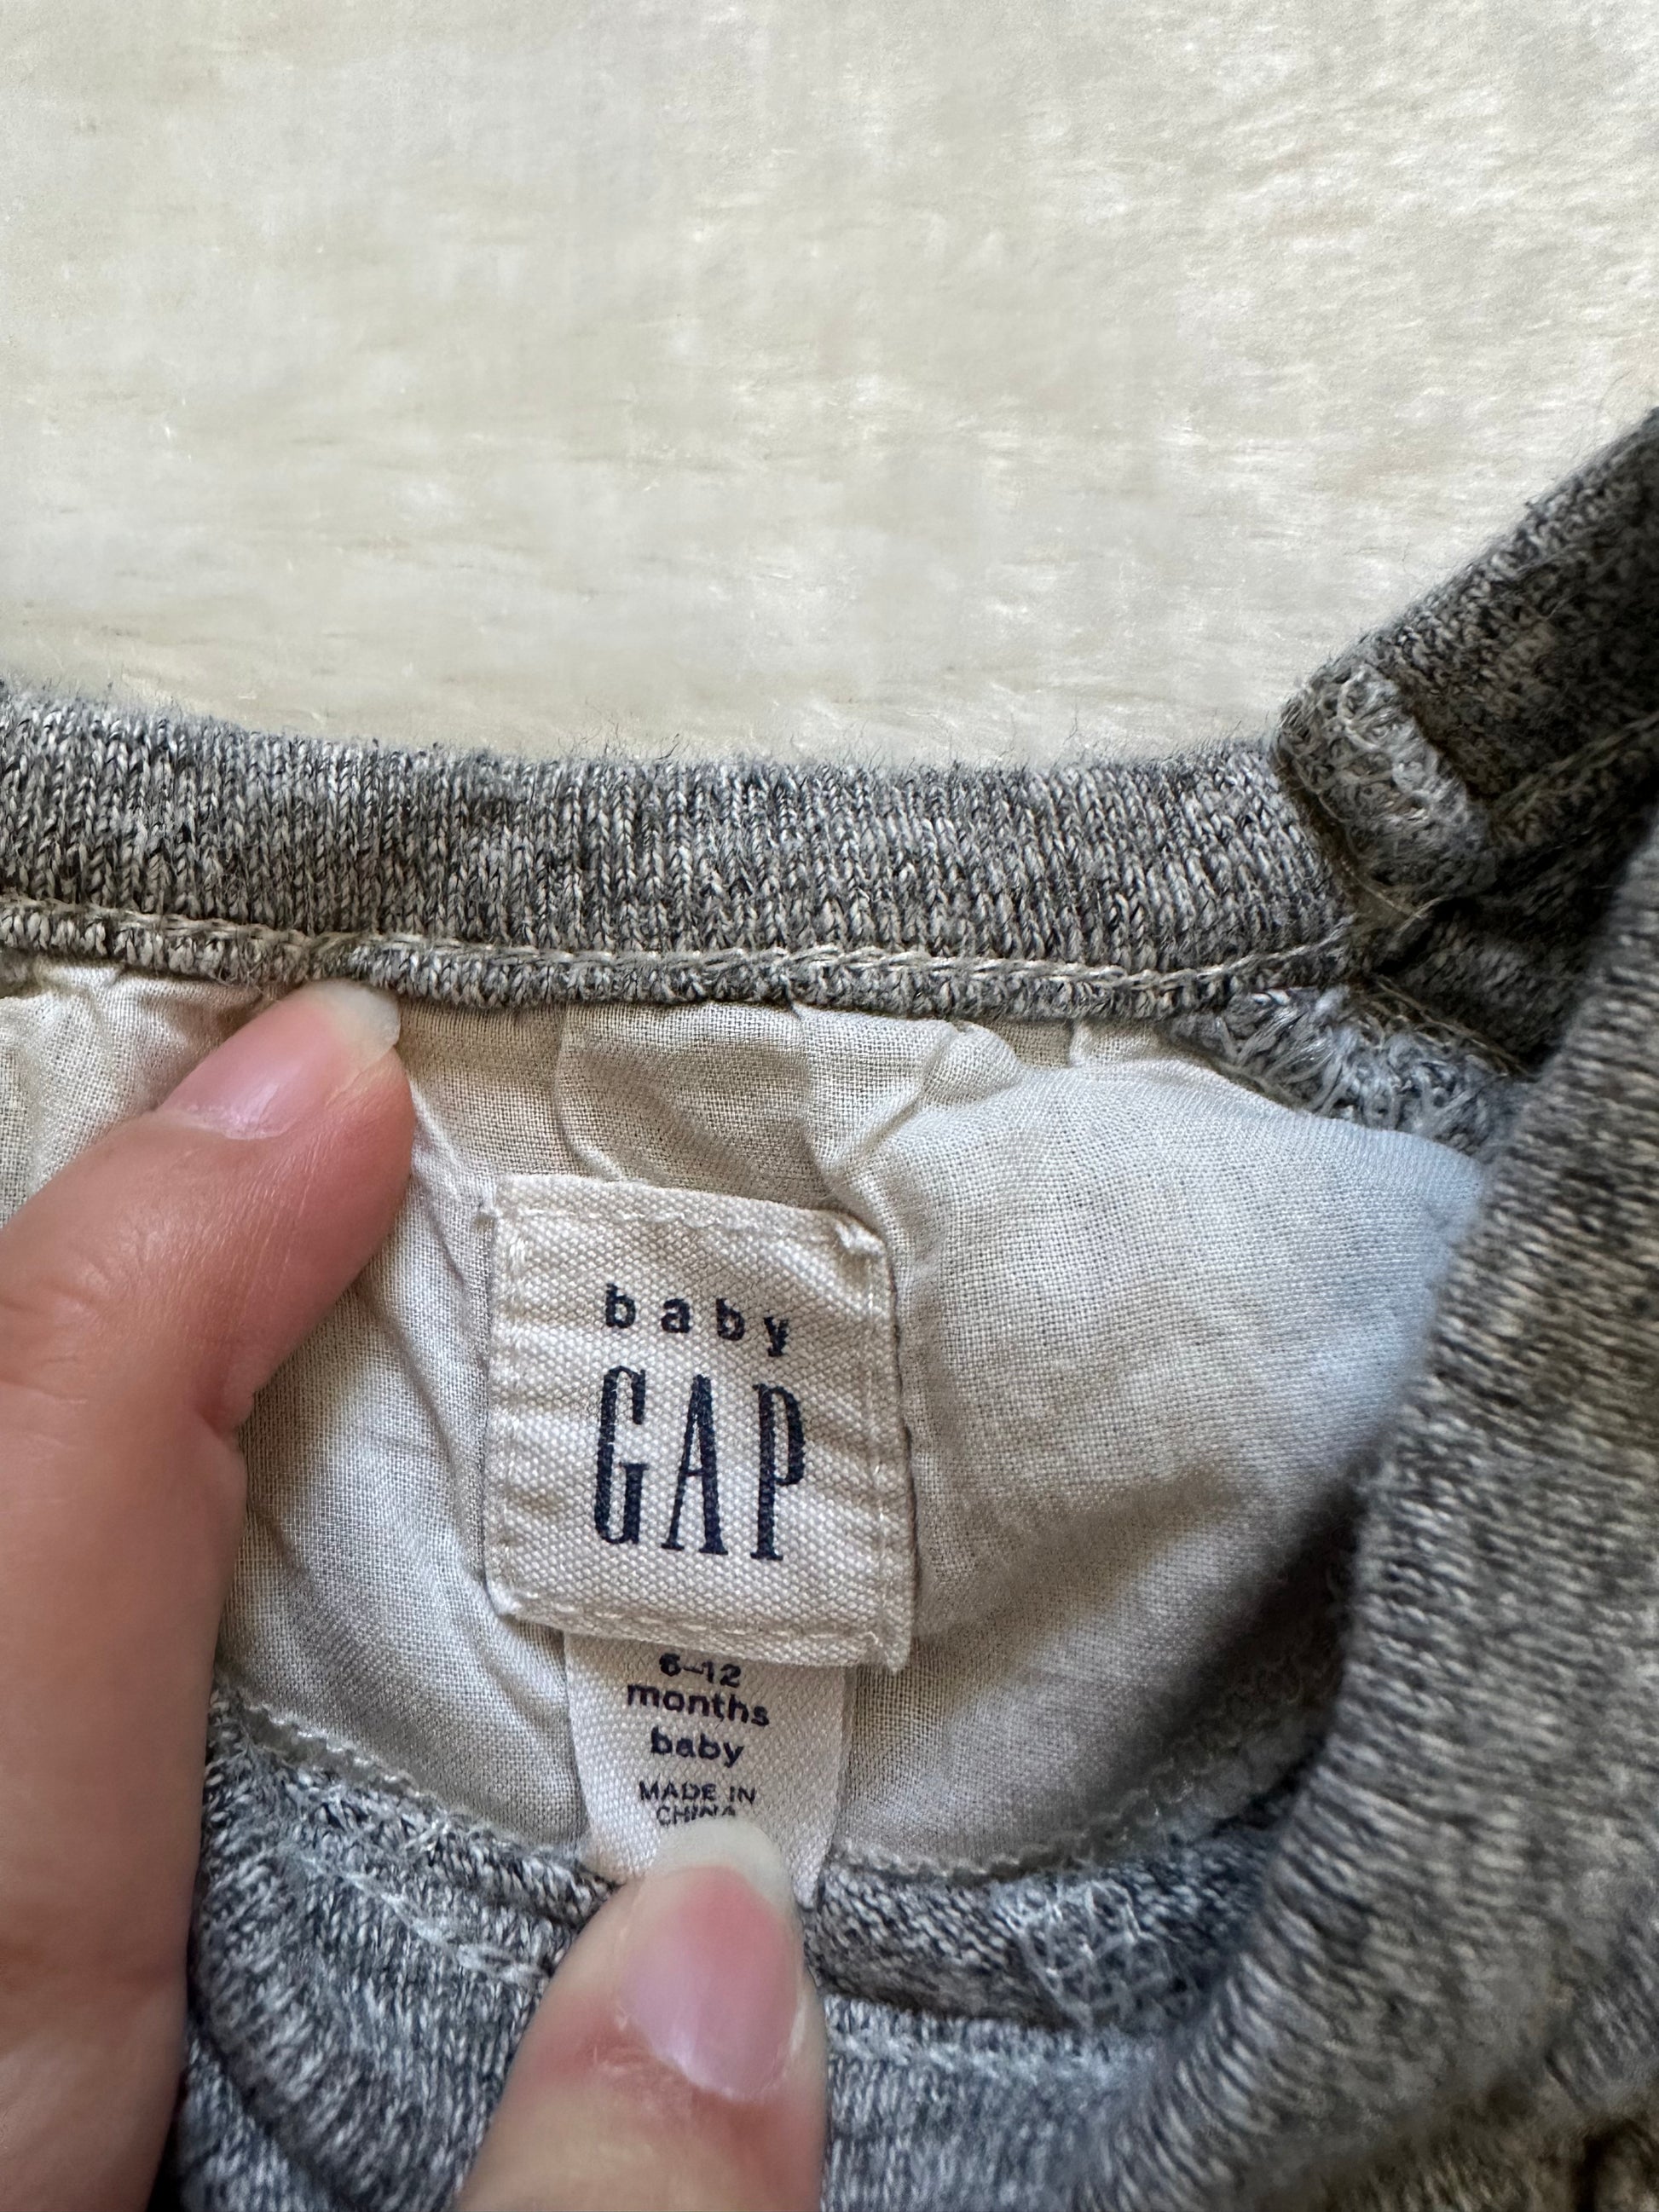 Gap Baby Sweater - Better World Thrift